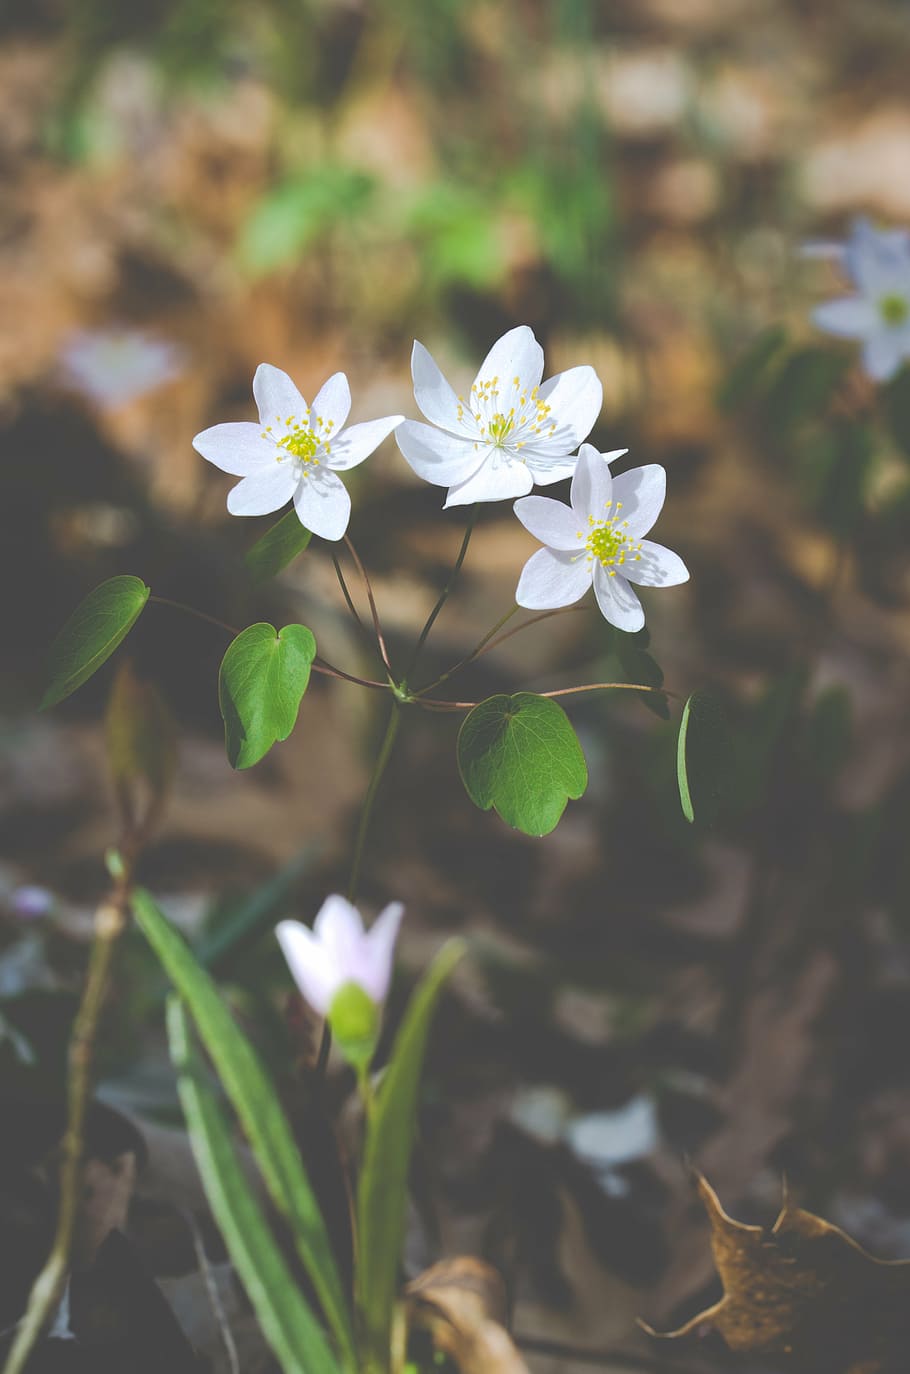 fotografi selektif-fokus, putih, bunga petaled, tiga, bunga, siang hari, musim semi, bunga liar, alam, kerapuhan